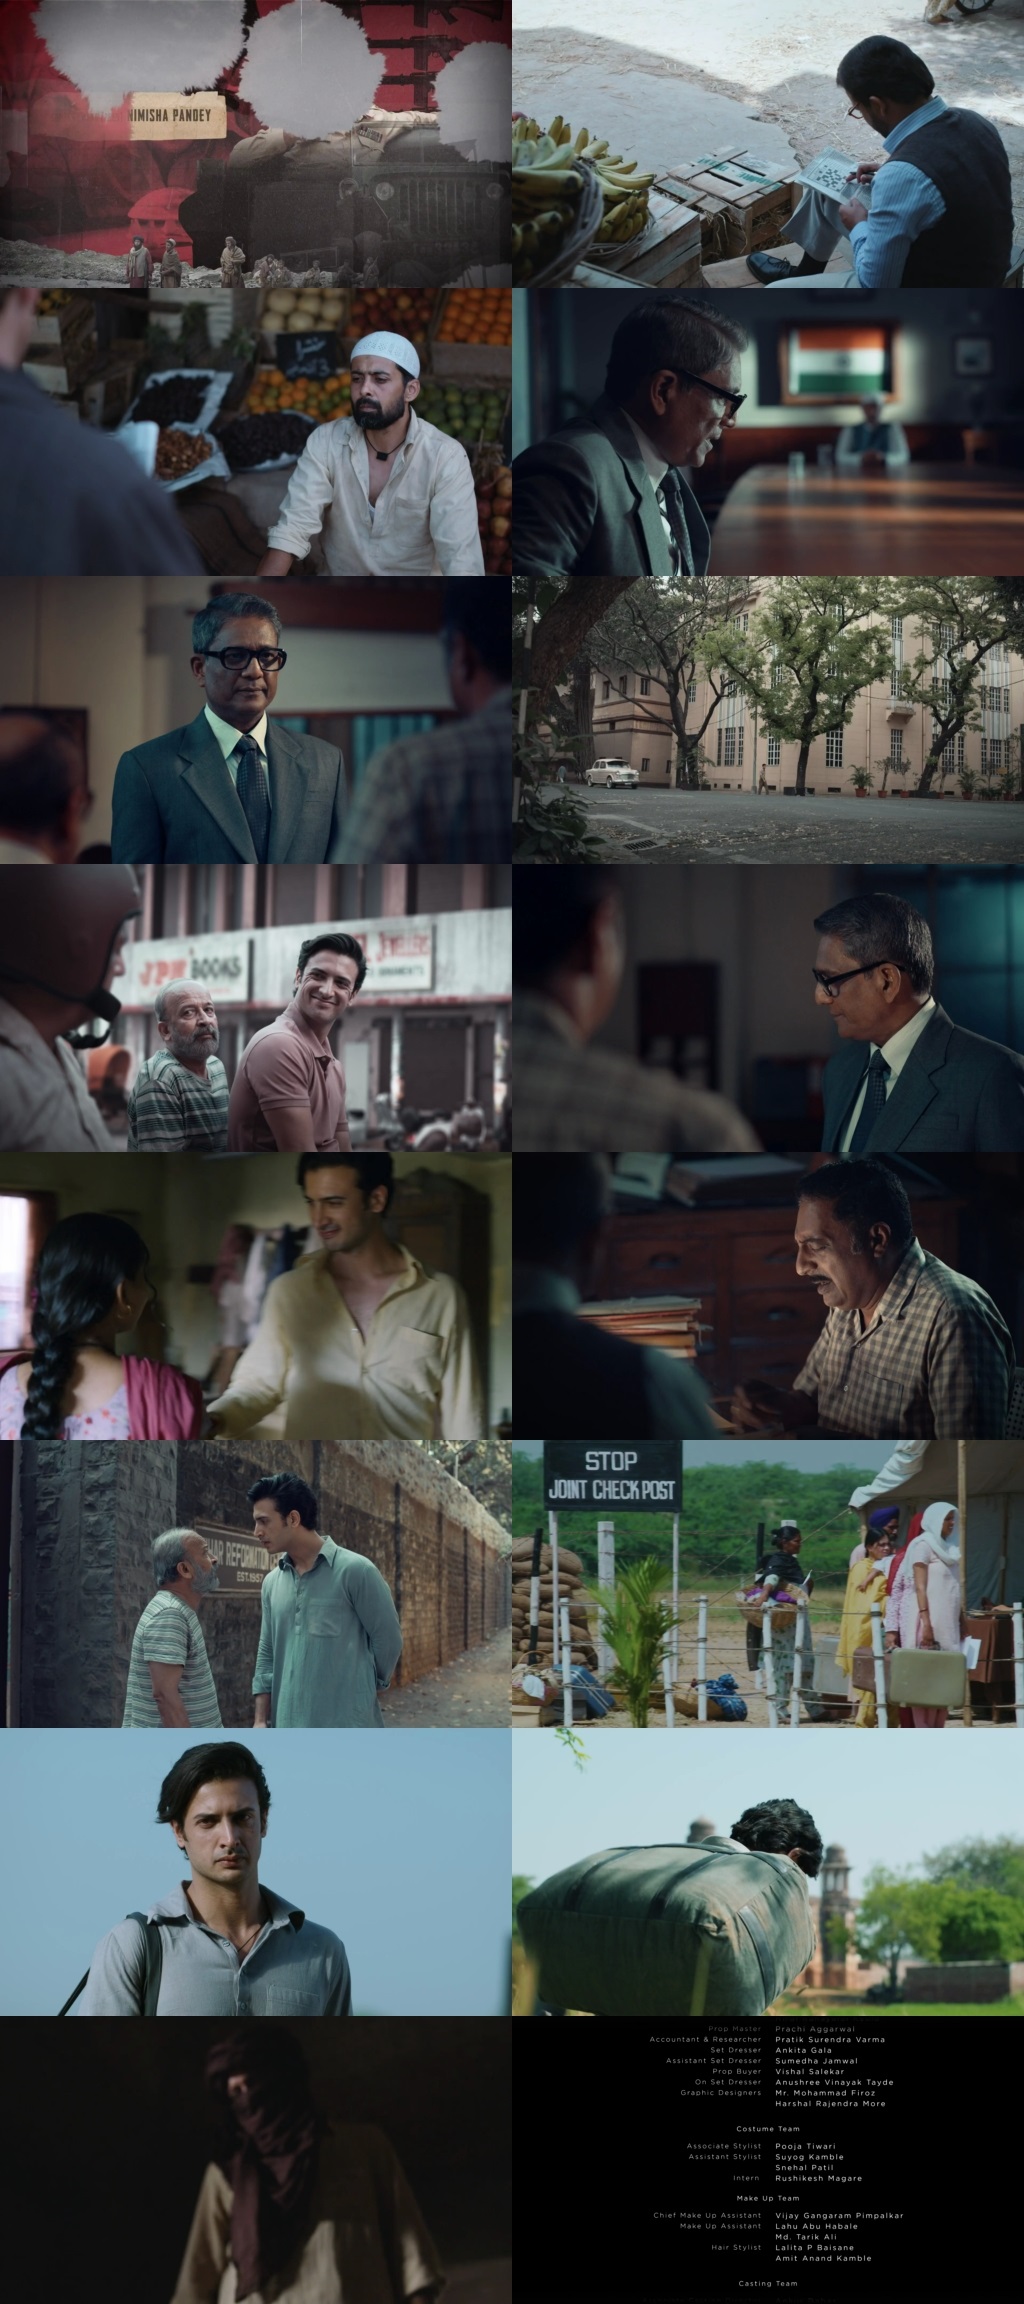 Mukhbir The Story of a Spy 2022 Hindi Season 01 Complete 480p 720p 1080p HDRip ESubs